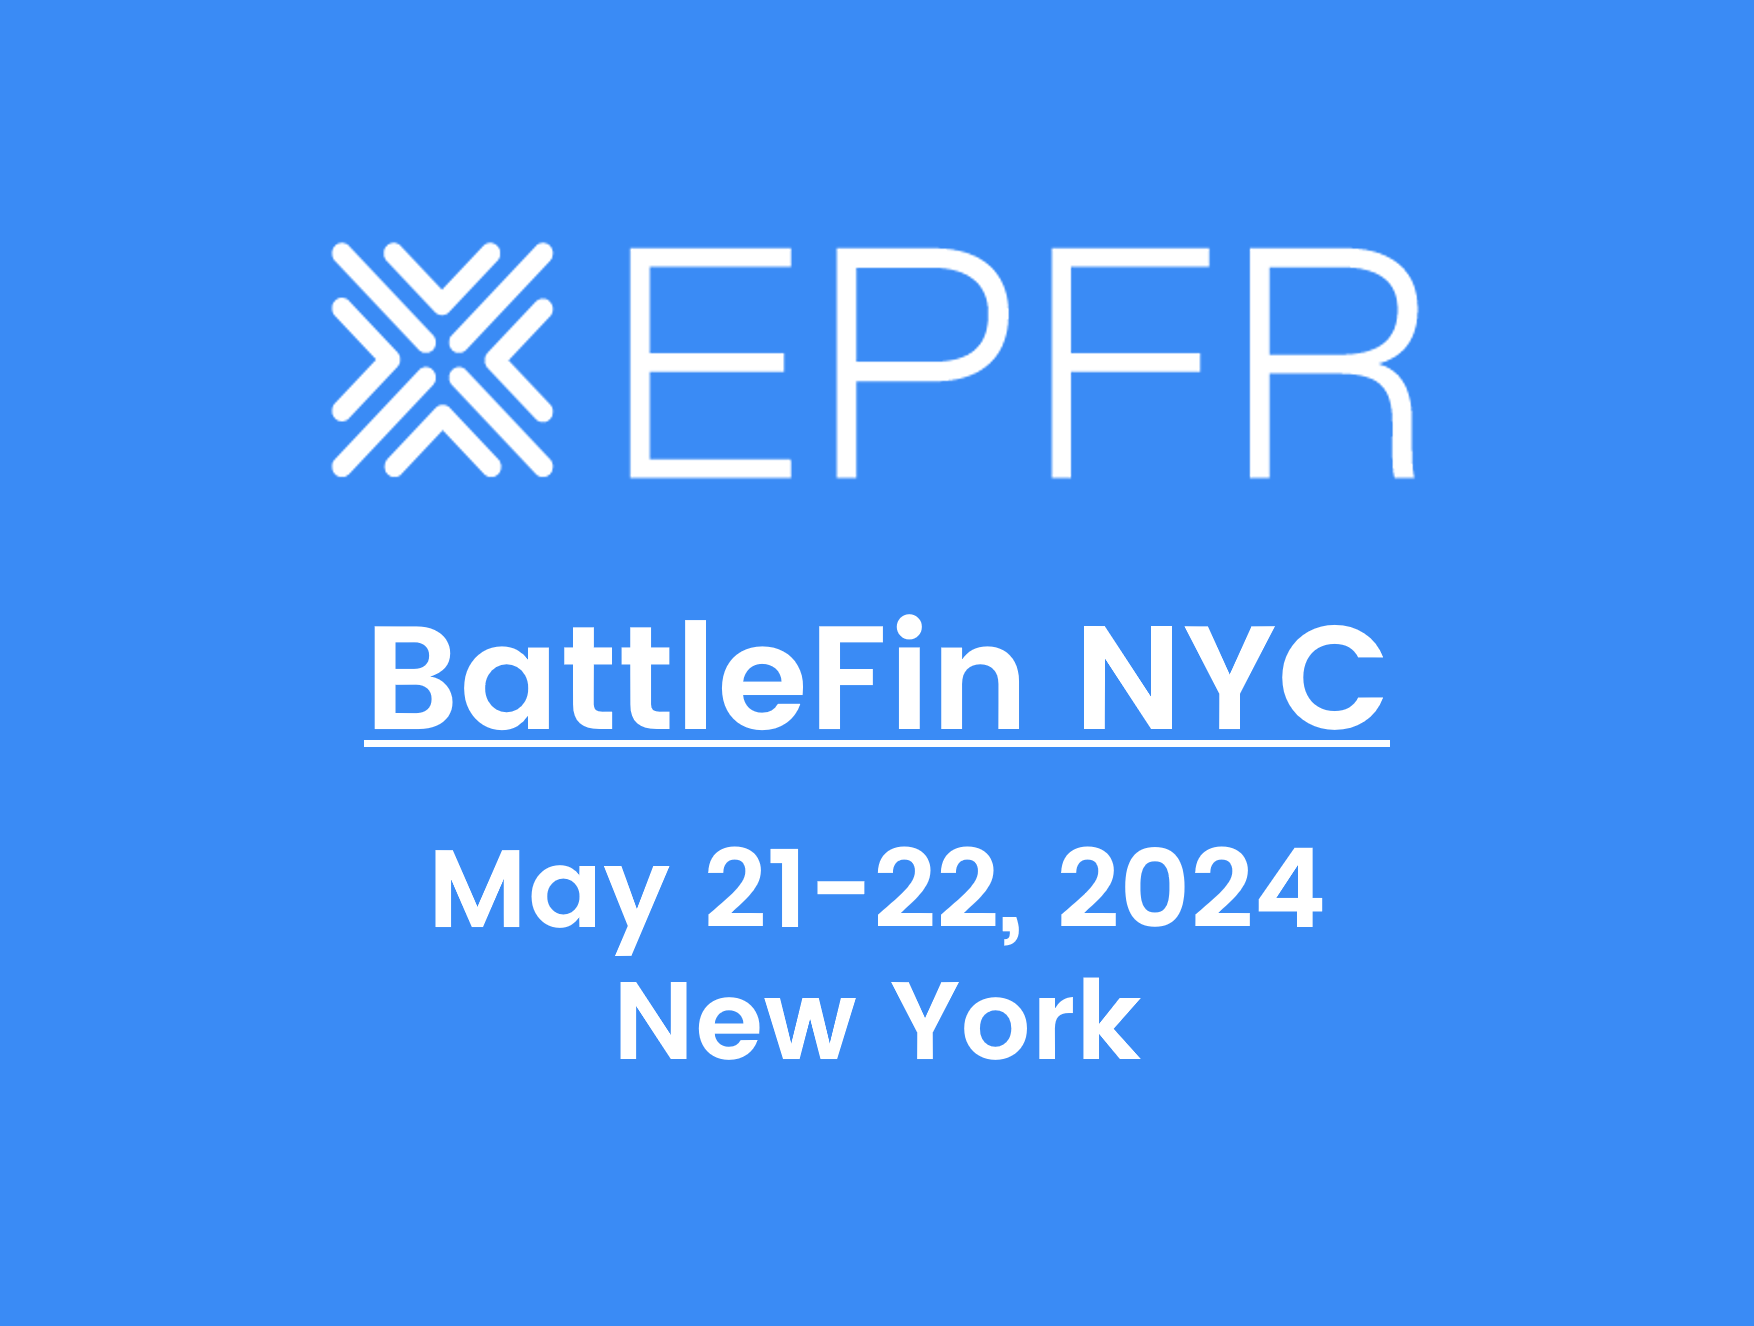 "BattleFin NYC, May 21-22, 2024, New York"